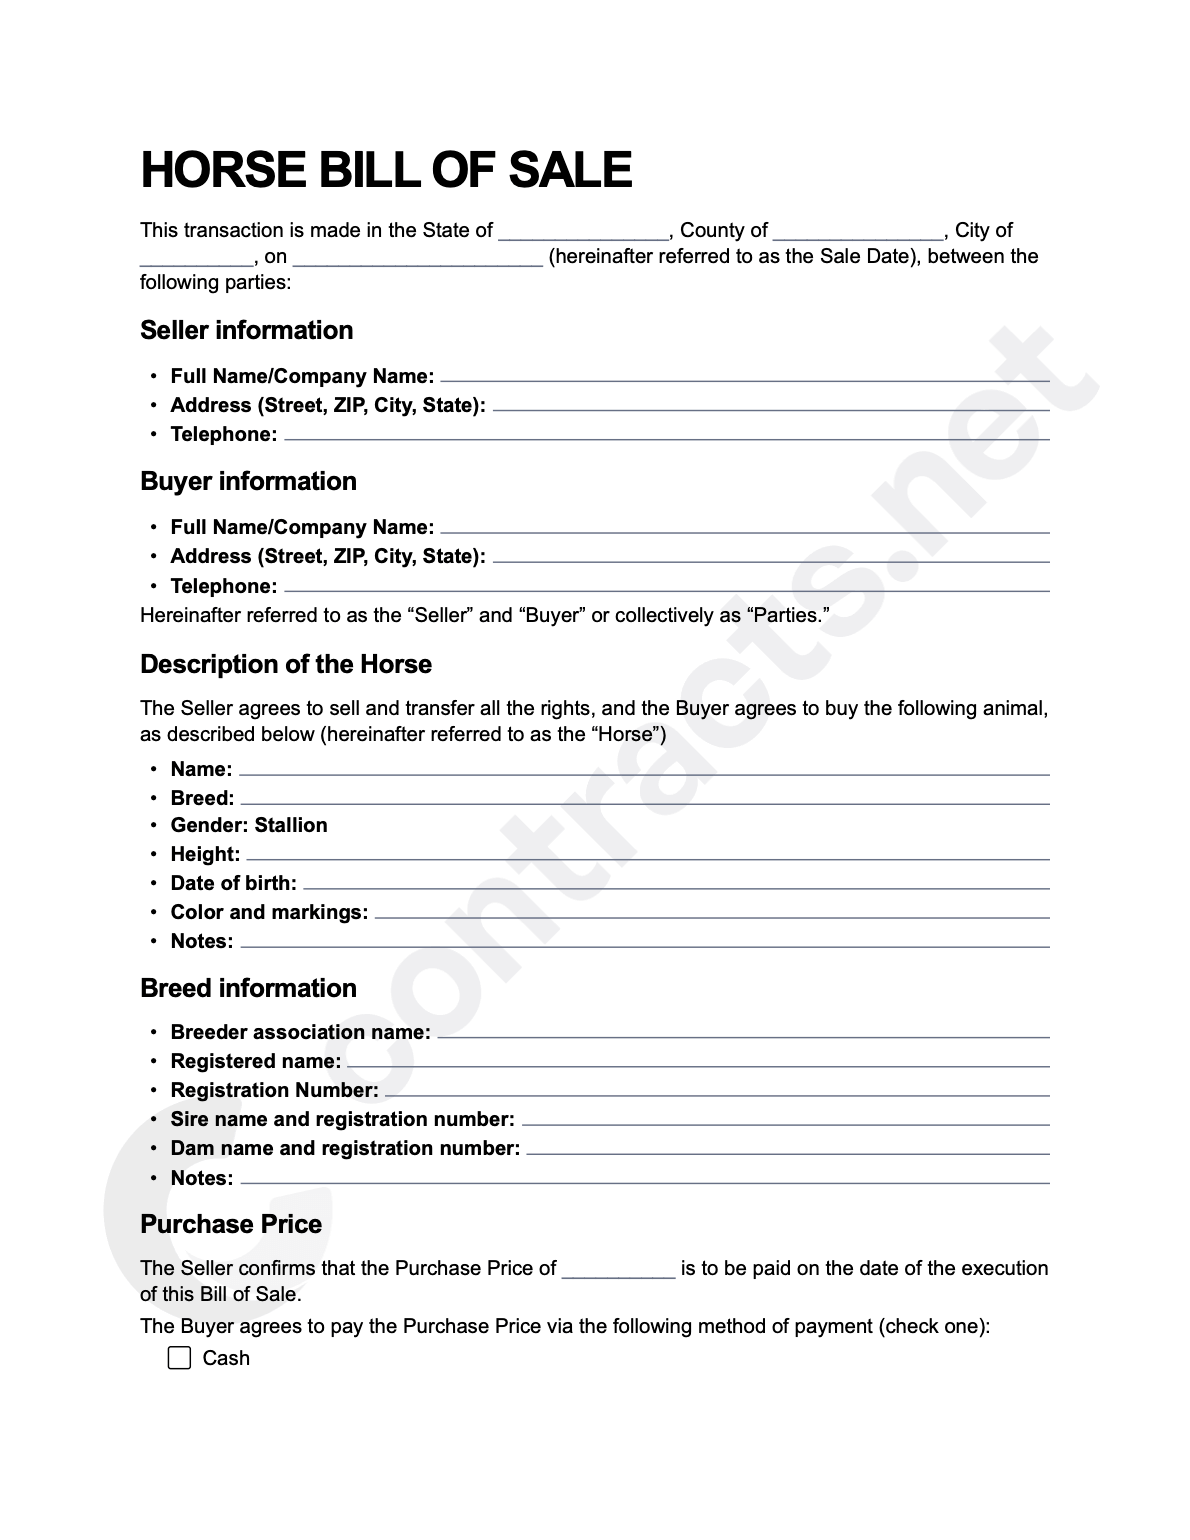 Horse Bill of Sale Form [PDF]